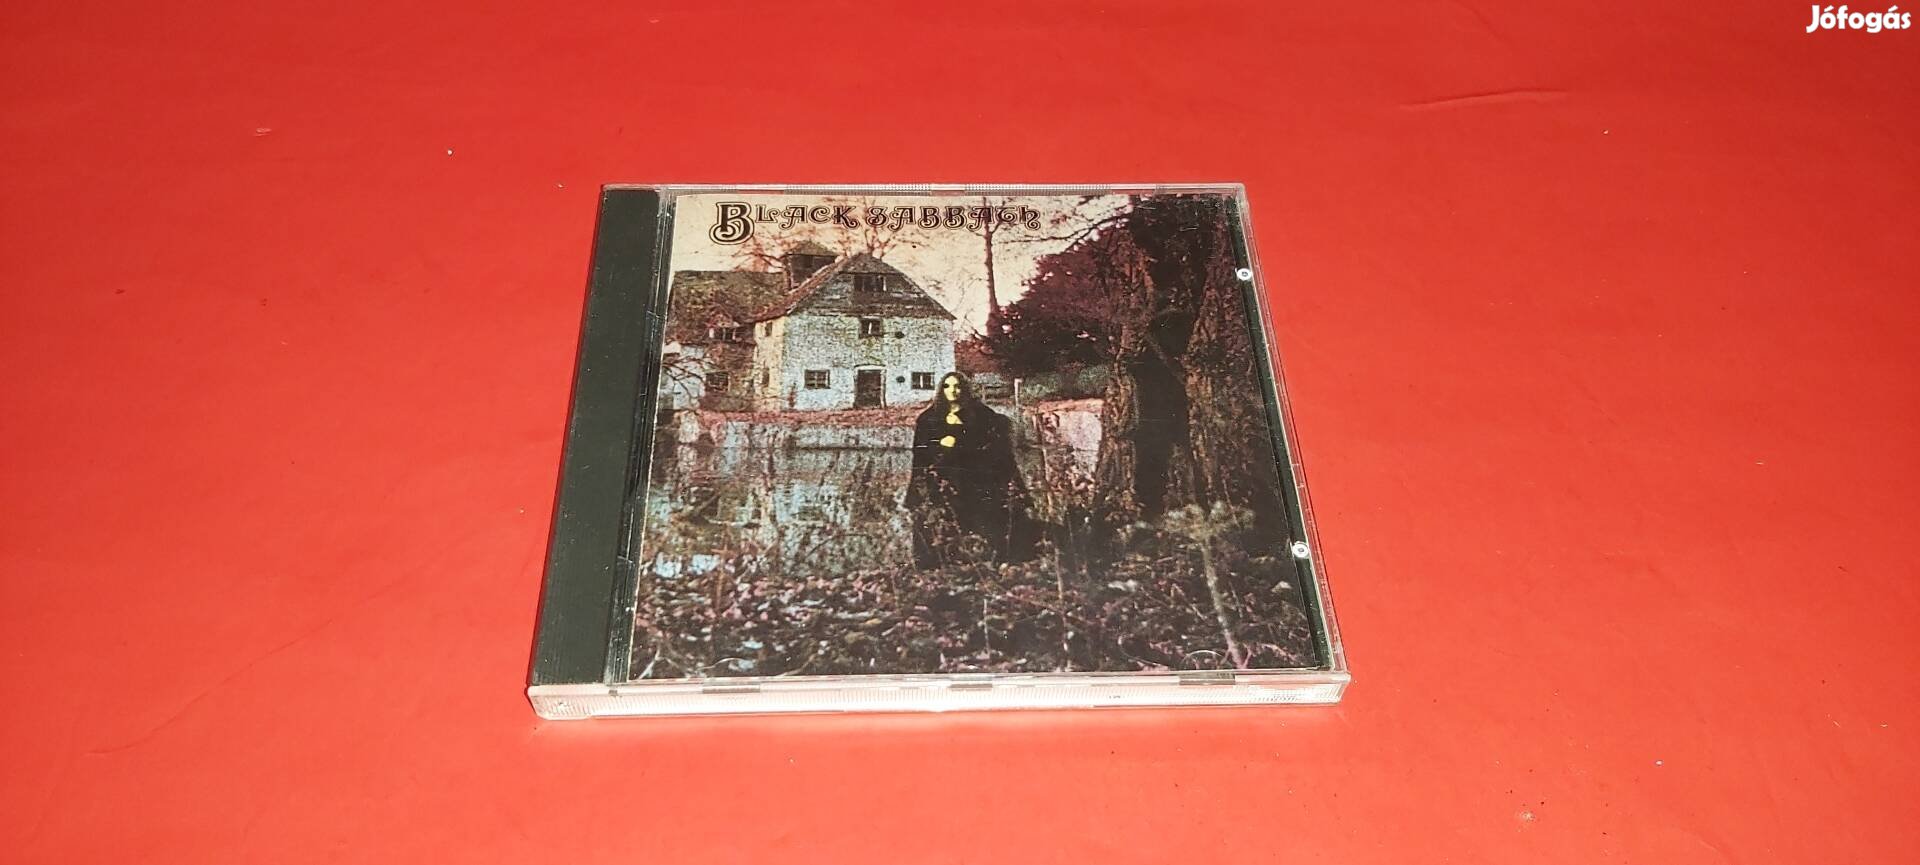 Black Sabbath  Black Sabbath Cd 1986